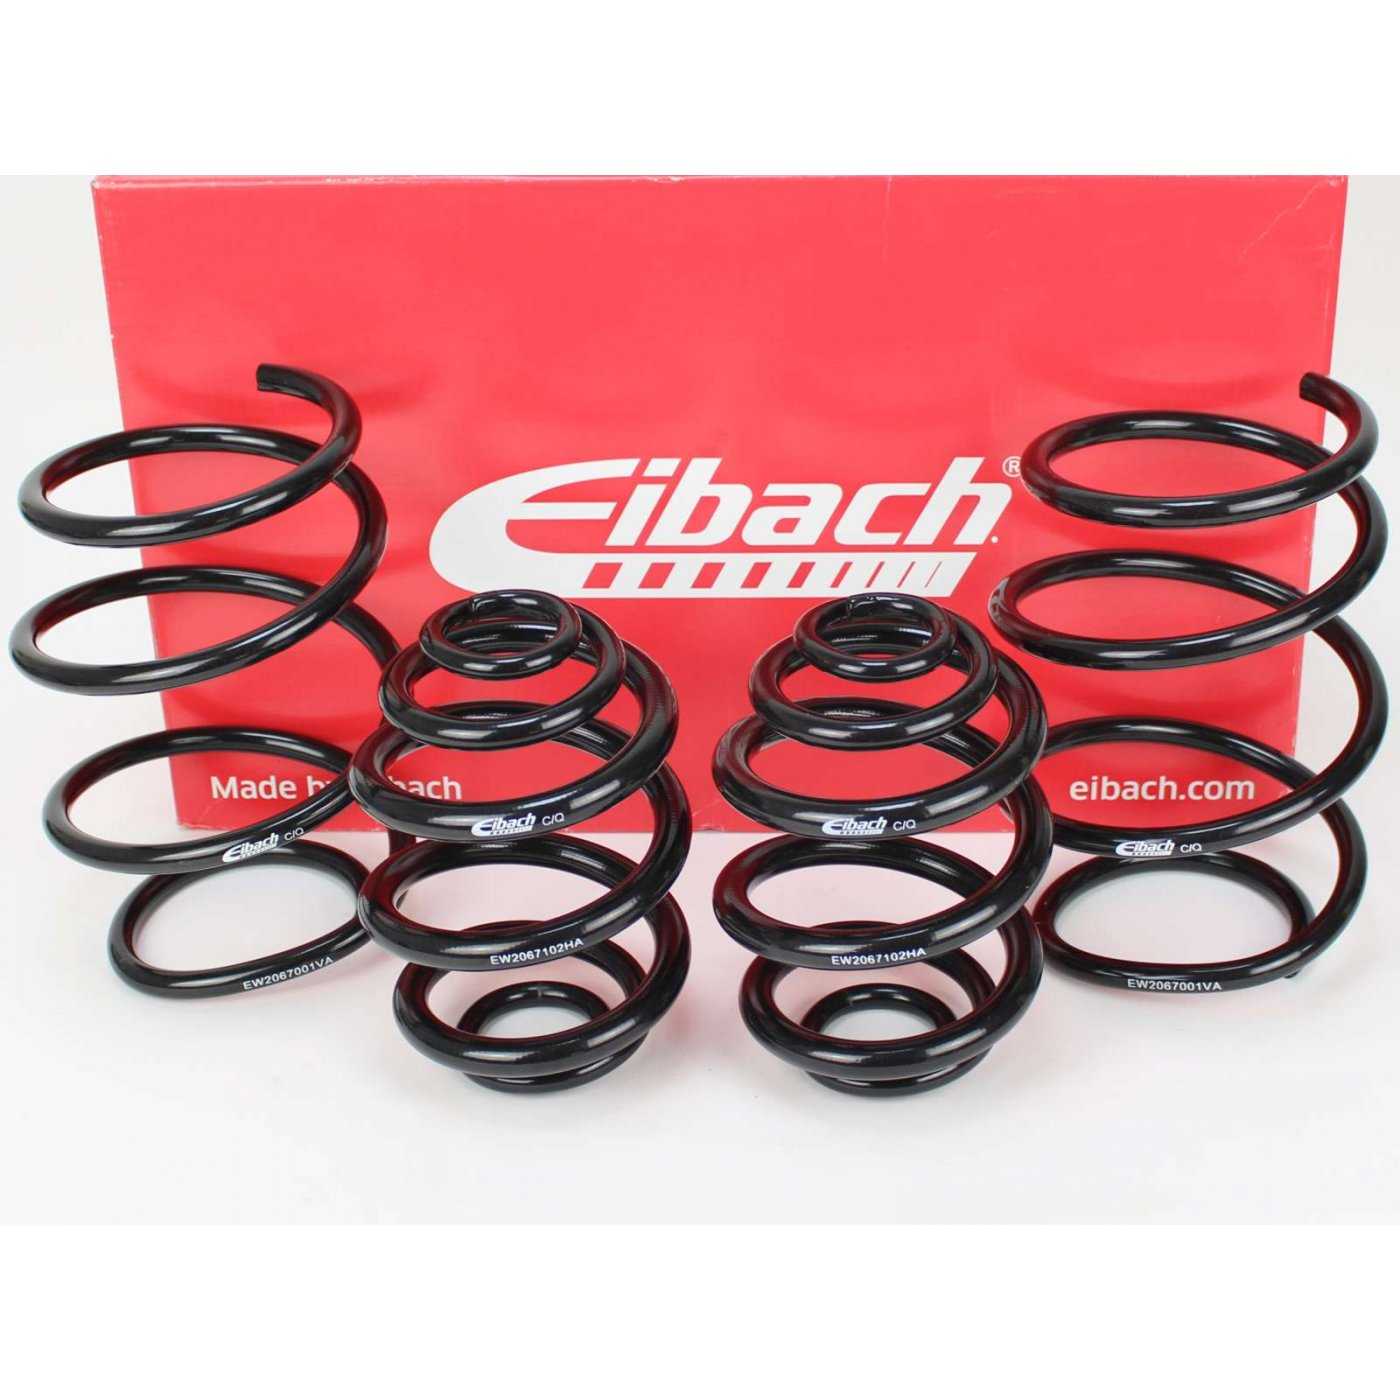 Eibach, Fiesta MK8 & MK8.5 ST - Eibach Redline Special Edition Lowering Springs